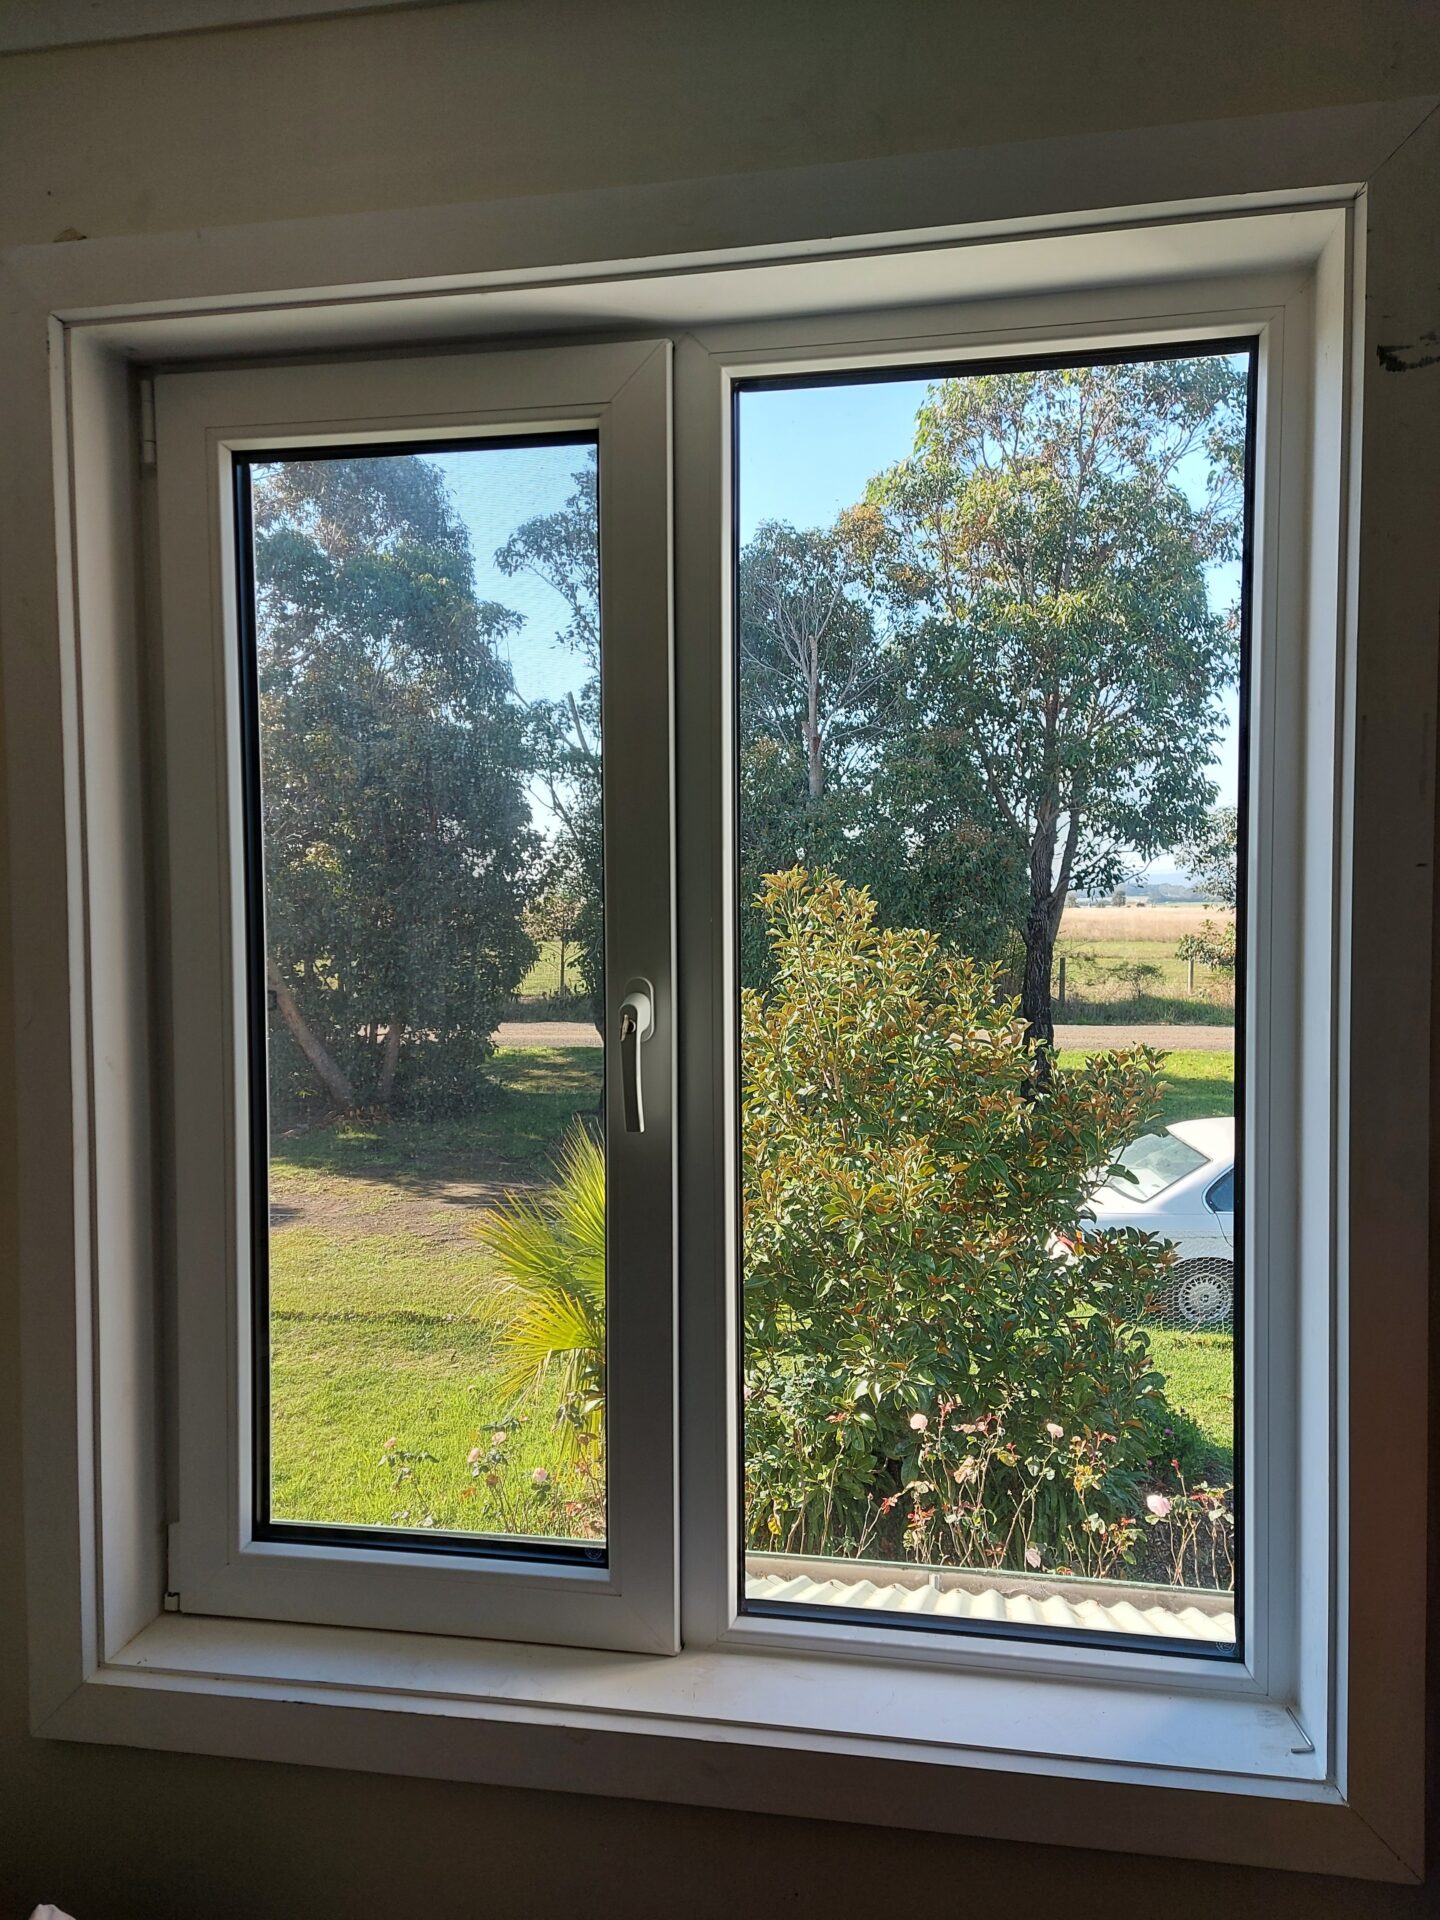 UPVC tilt turn windows energy efficient double glazed glass front view at APS Double Glazing